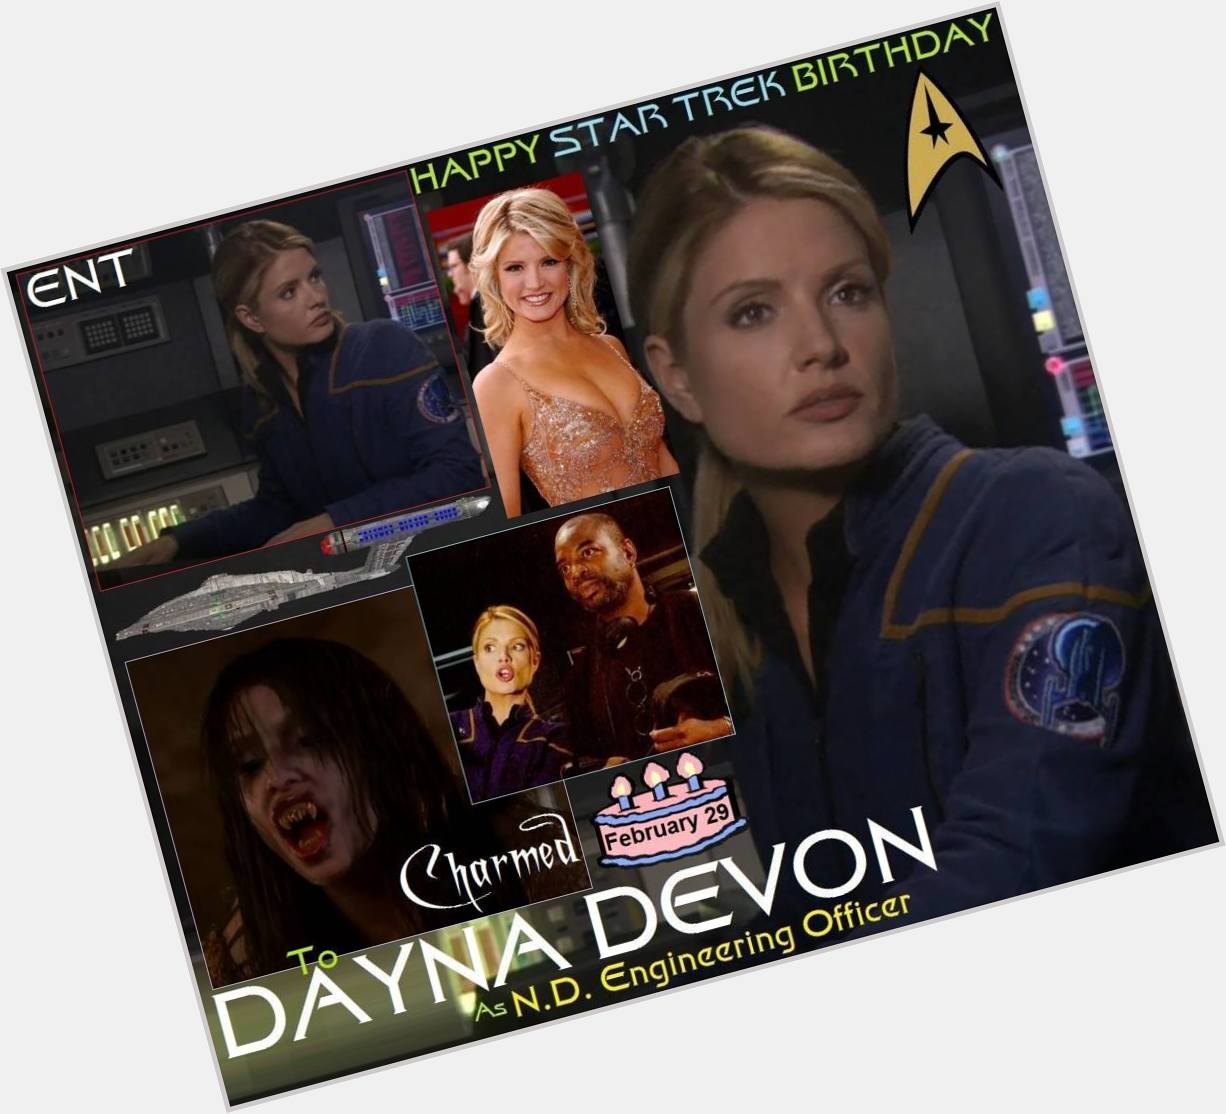 Happy birthday Dayna Devon, born March 20, 1965.  